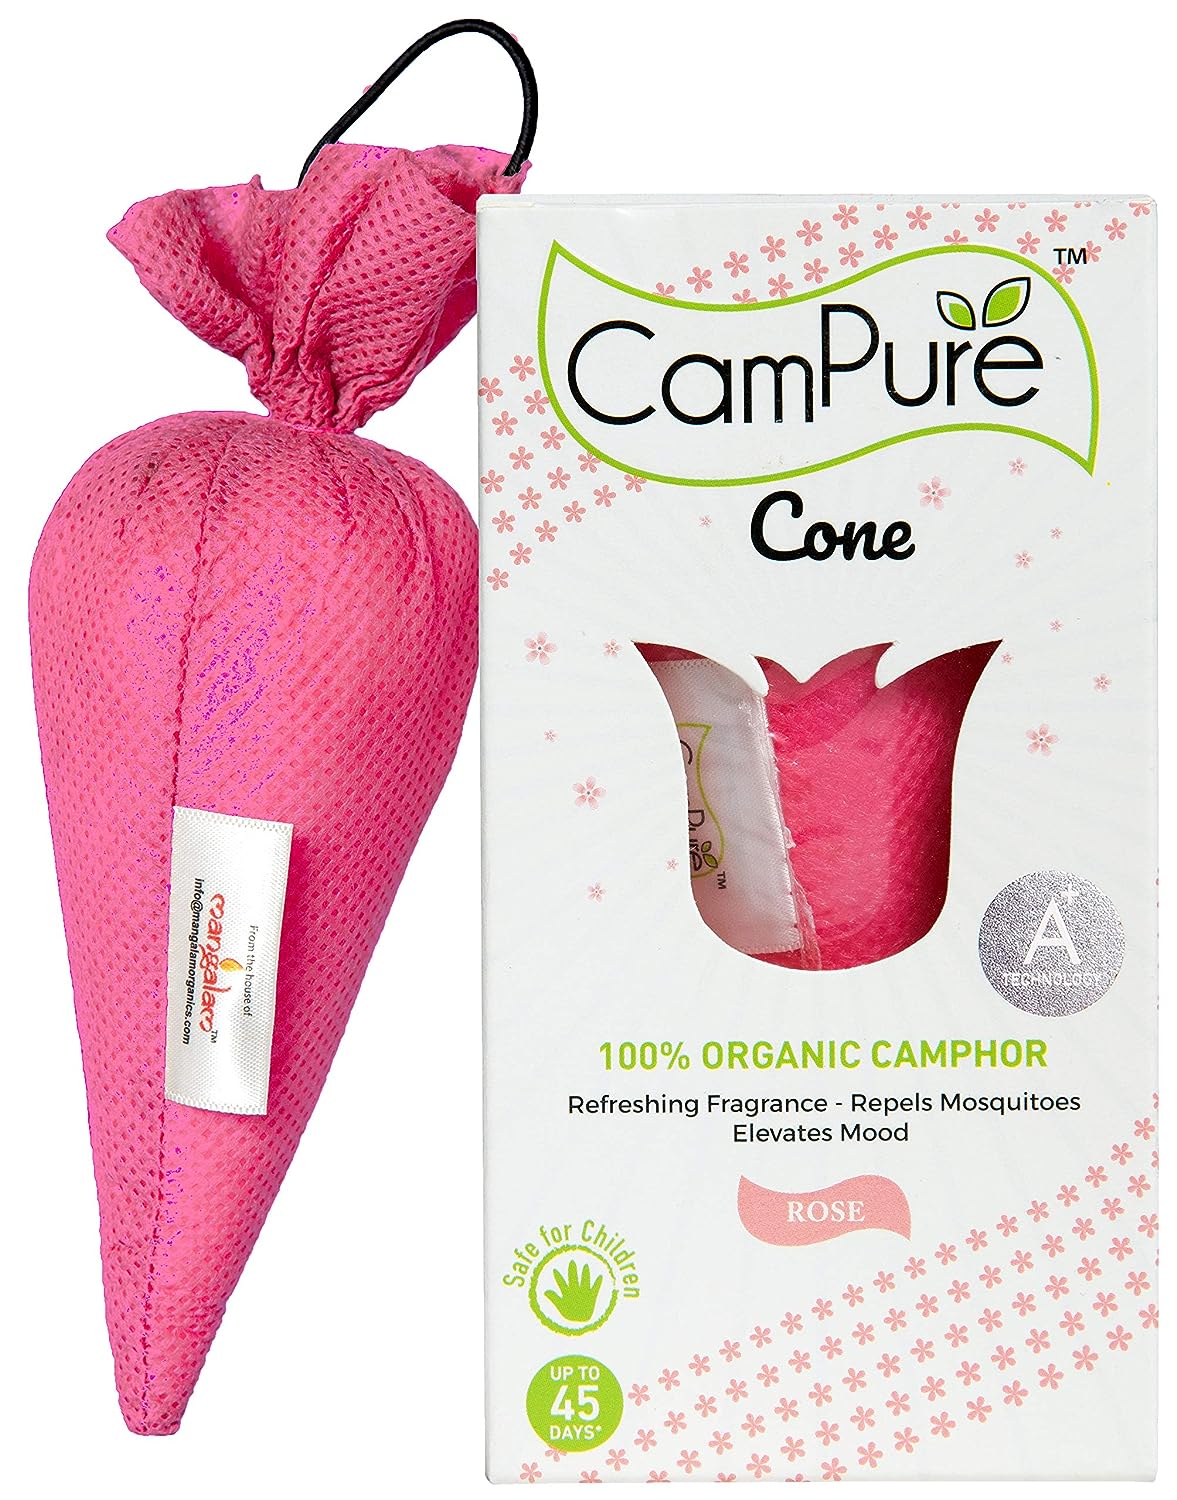 Mangalam CamPure-Camphor Cone (Rose)- Room, Car and Air Freshener & Mosquito Repellent